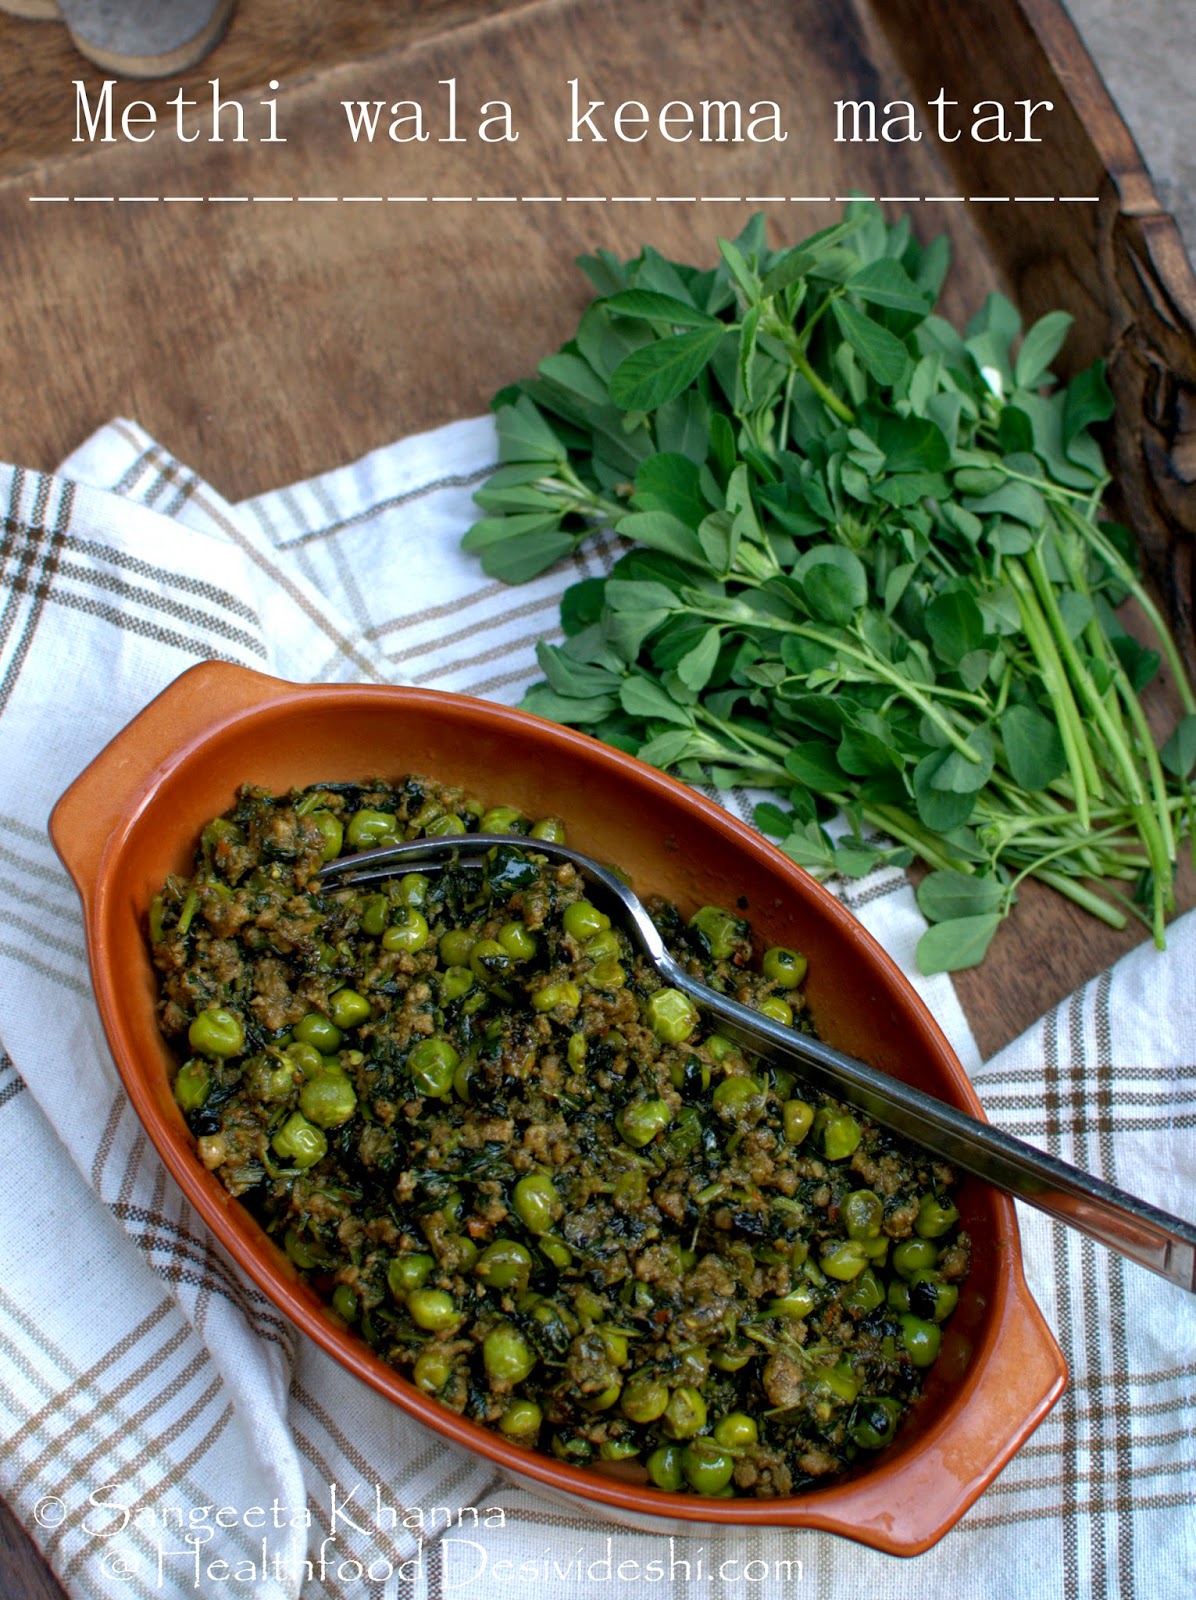 keema matar recipe with fresh methi (fenugreek) greens 